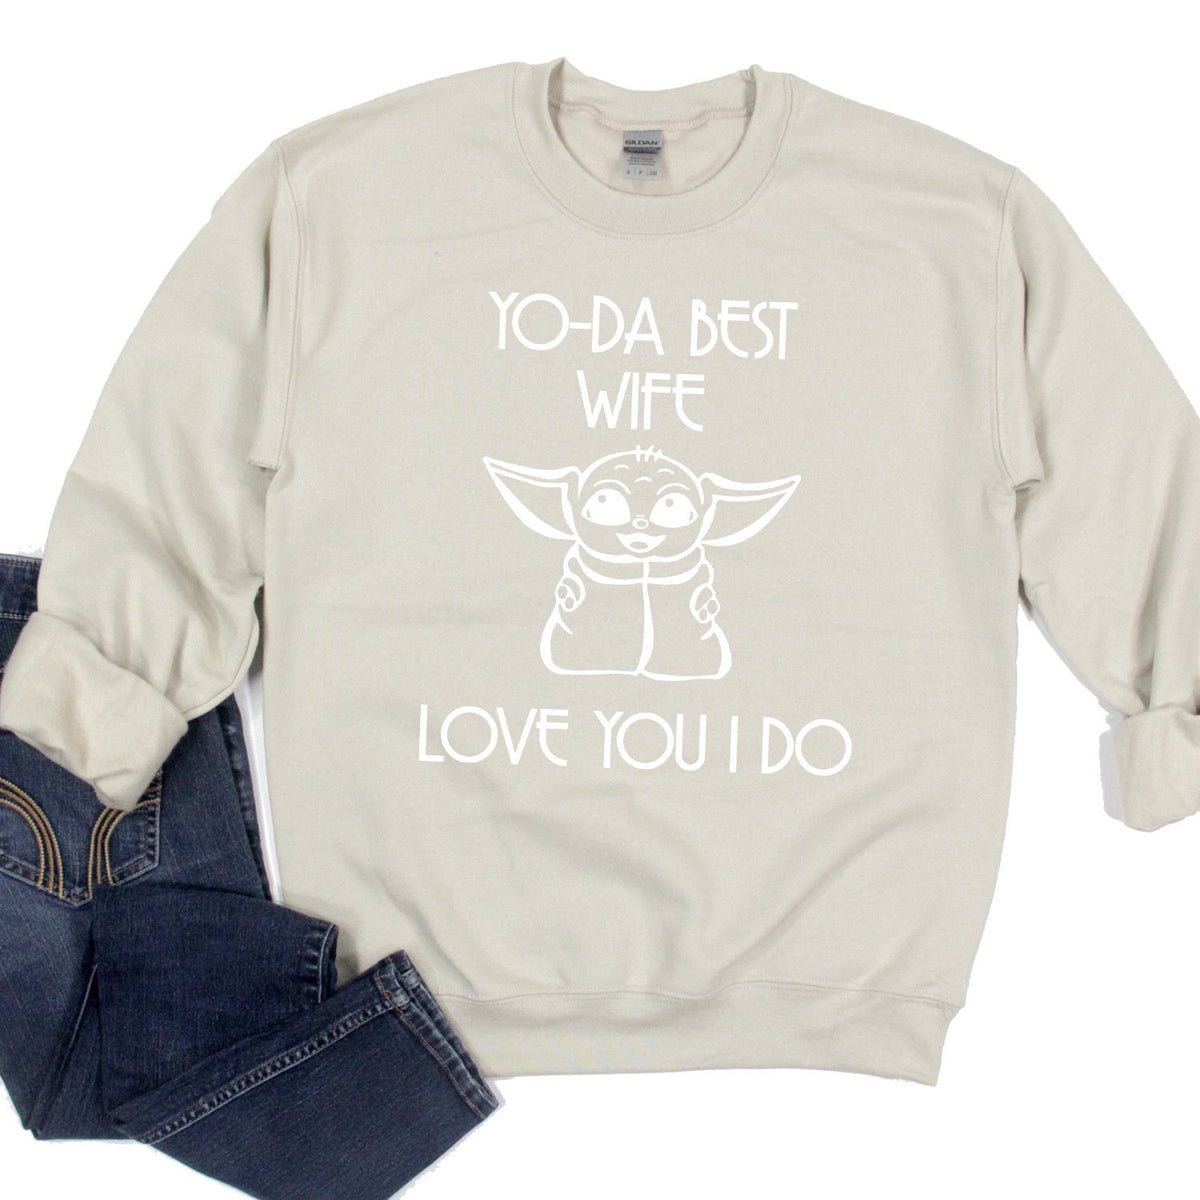 Yo-Da Best Wife Love You I Do - Long Sleeve Heavy Crewneck Sweatshirt